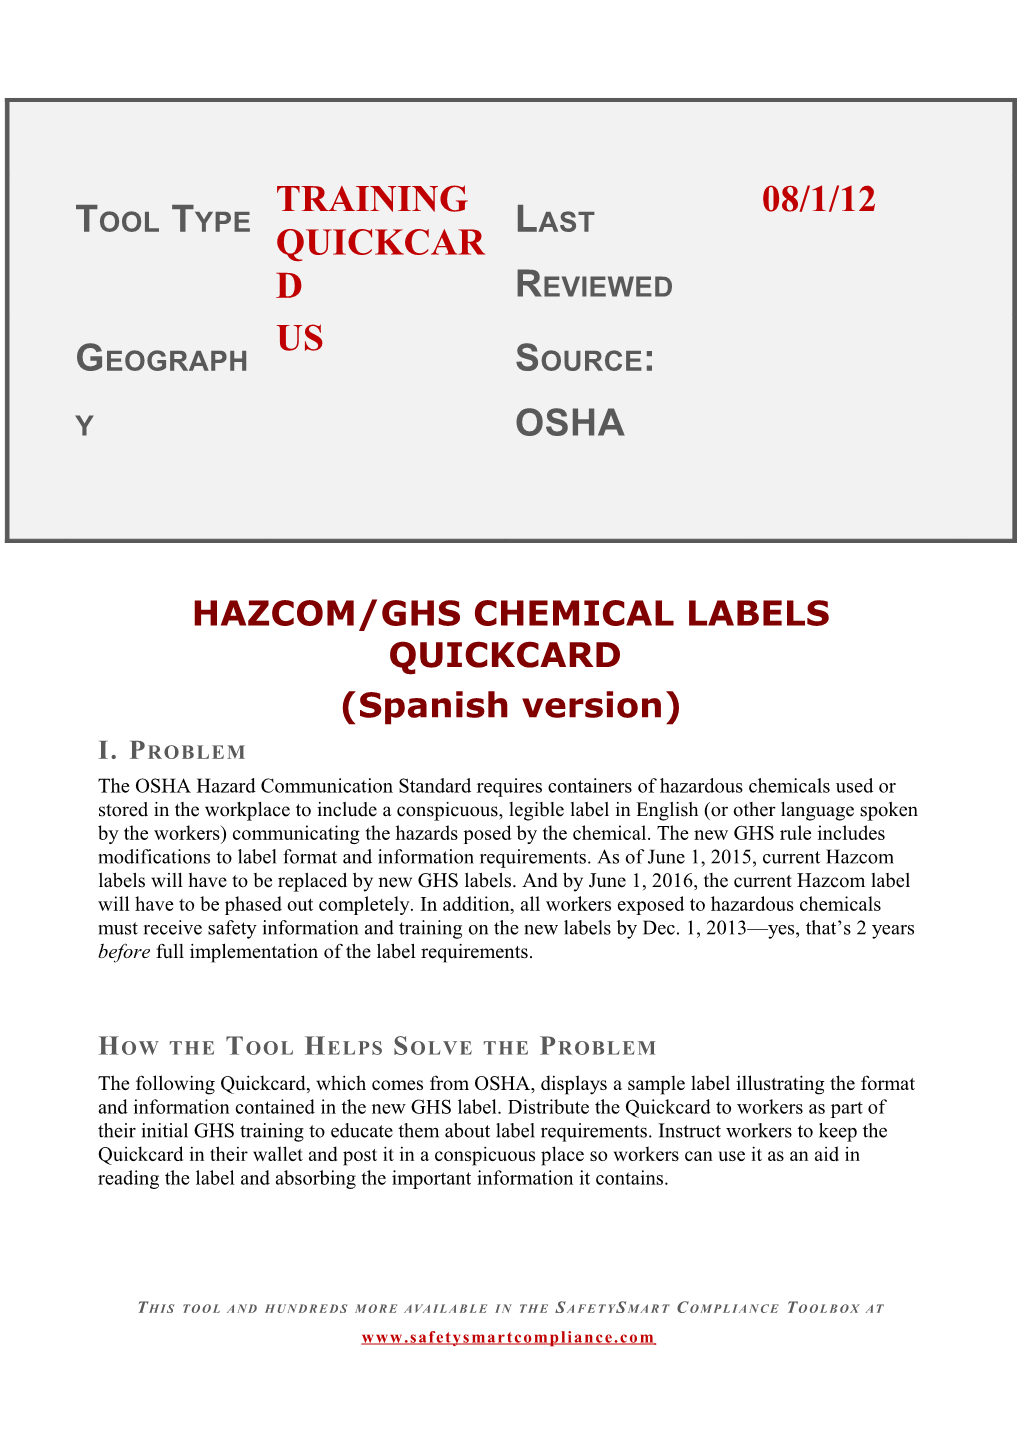 Hazcom/Ghs Chemical Labels Quickcard